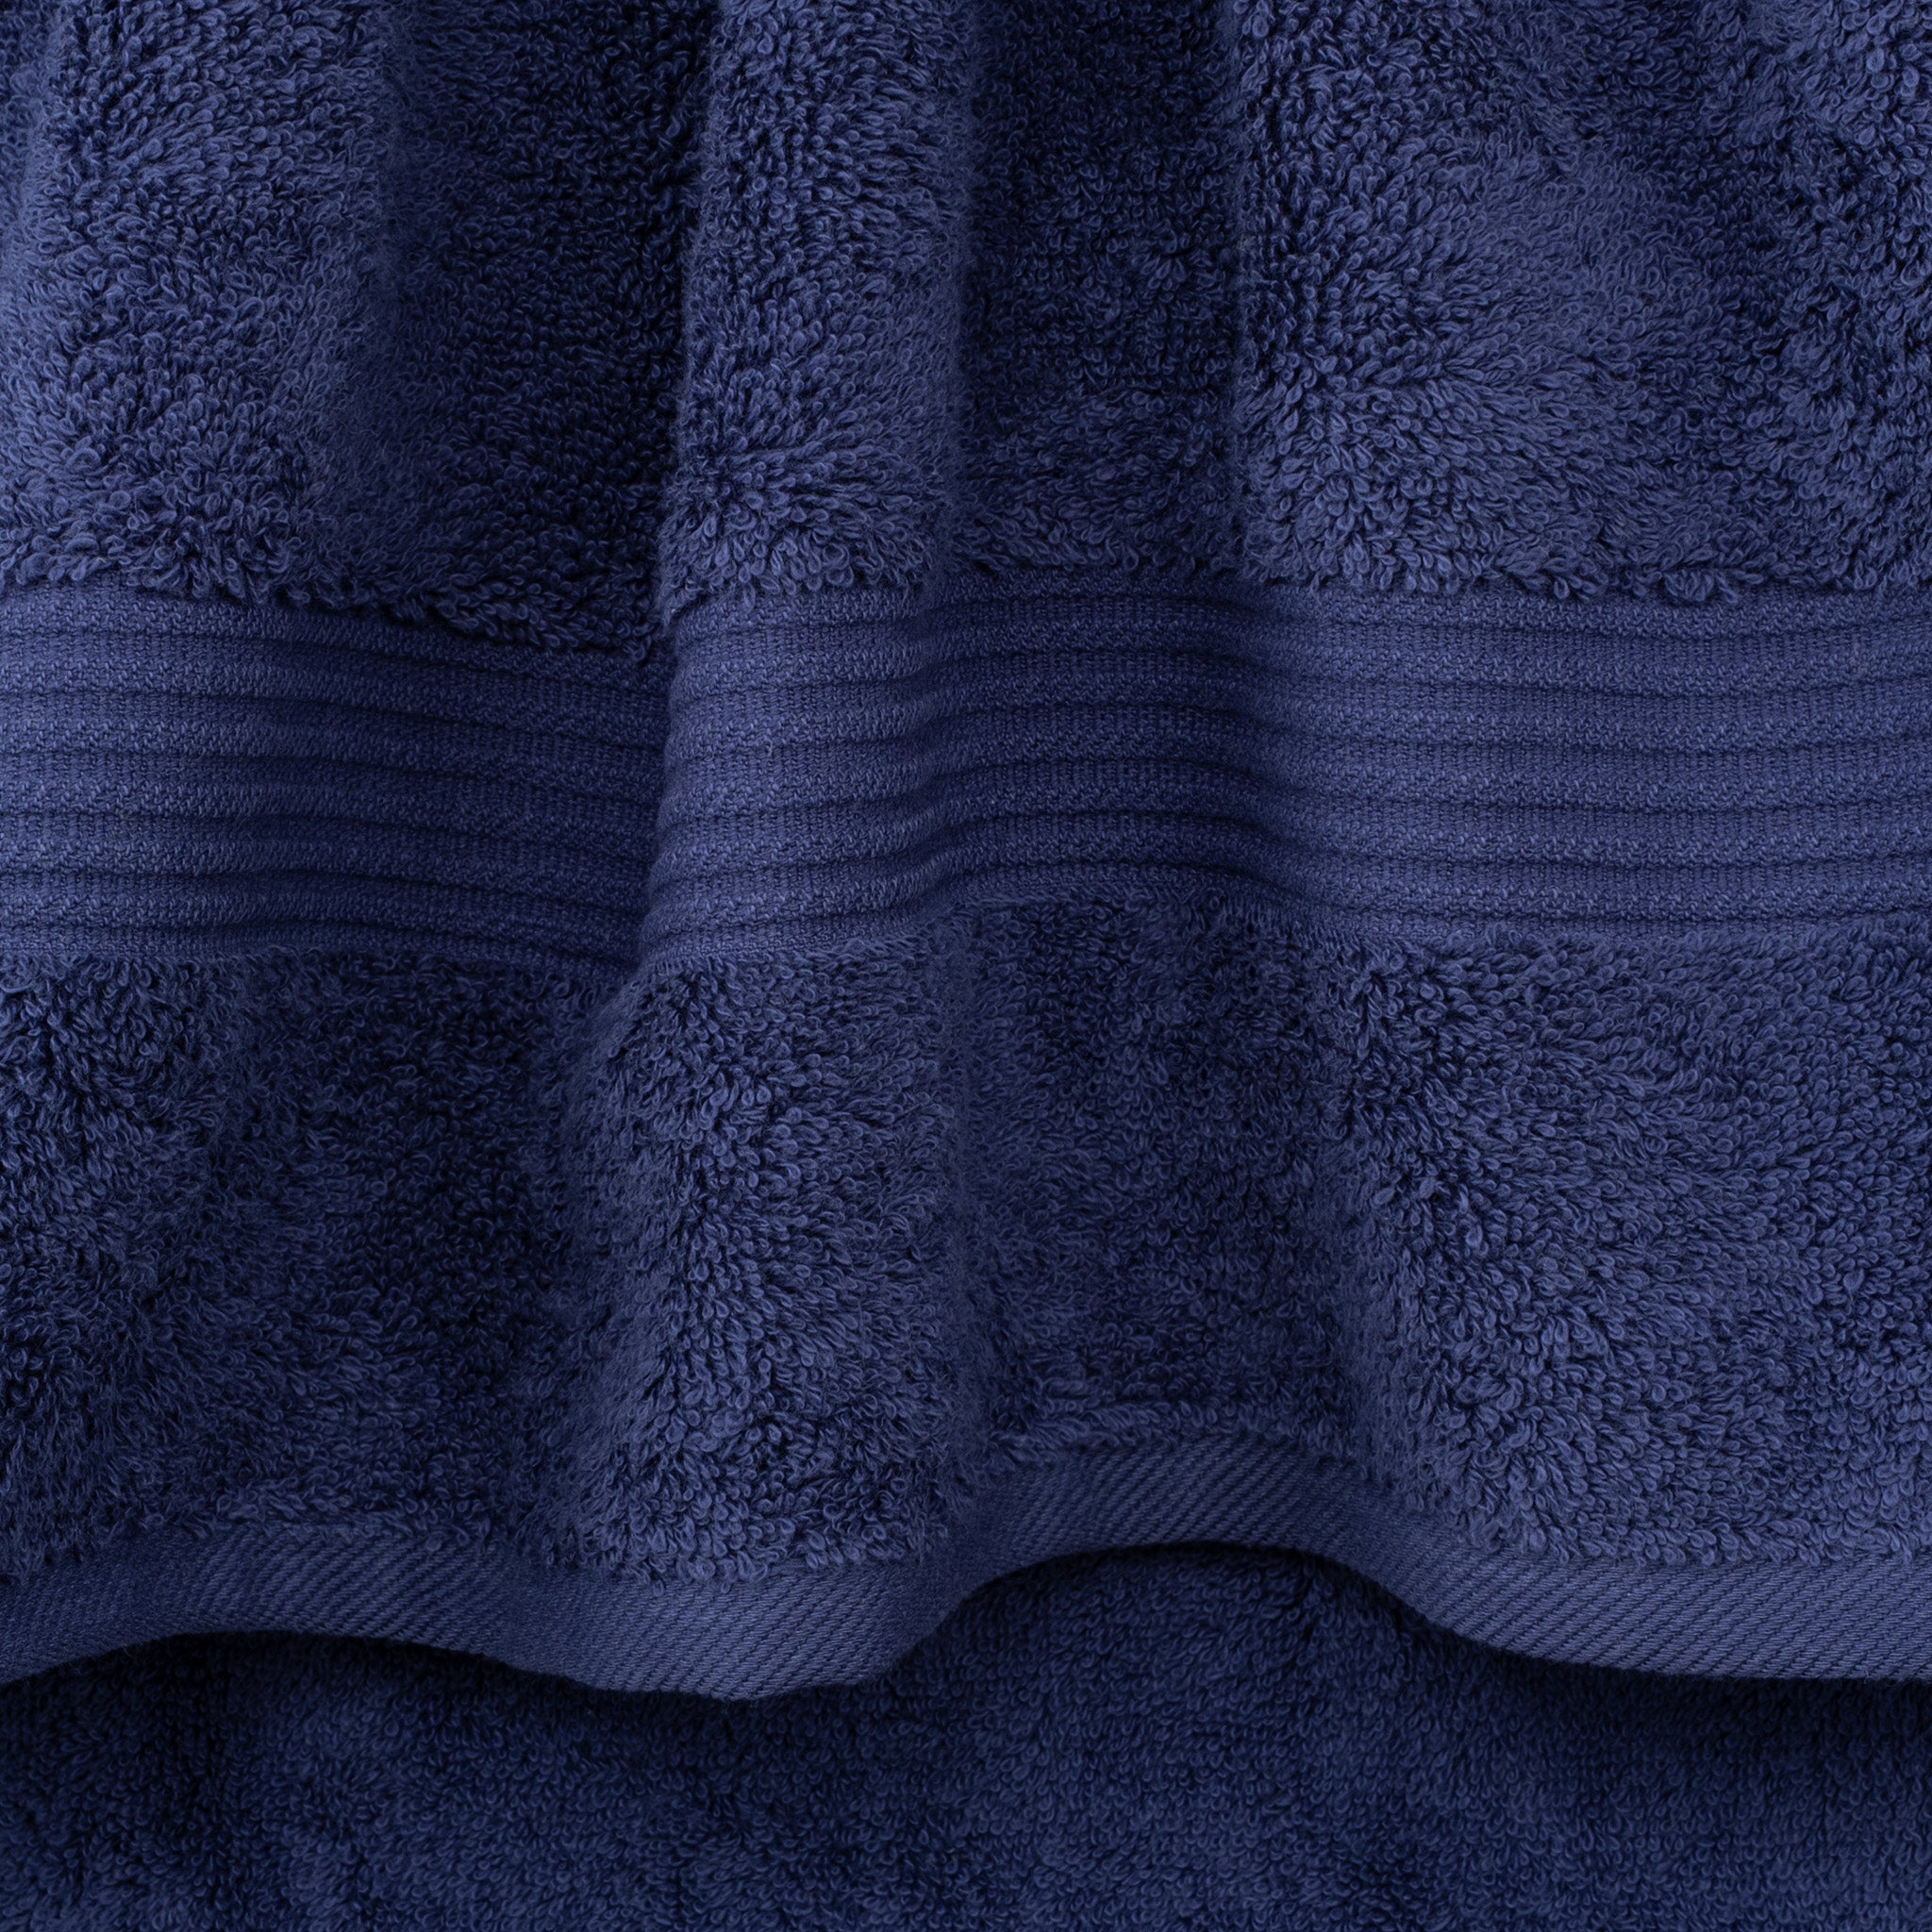 American Soft Linen Bekos 100% Cotton Turkish Towels 6 Piece Bath Towel Set -navy-blue-03